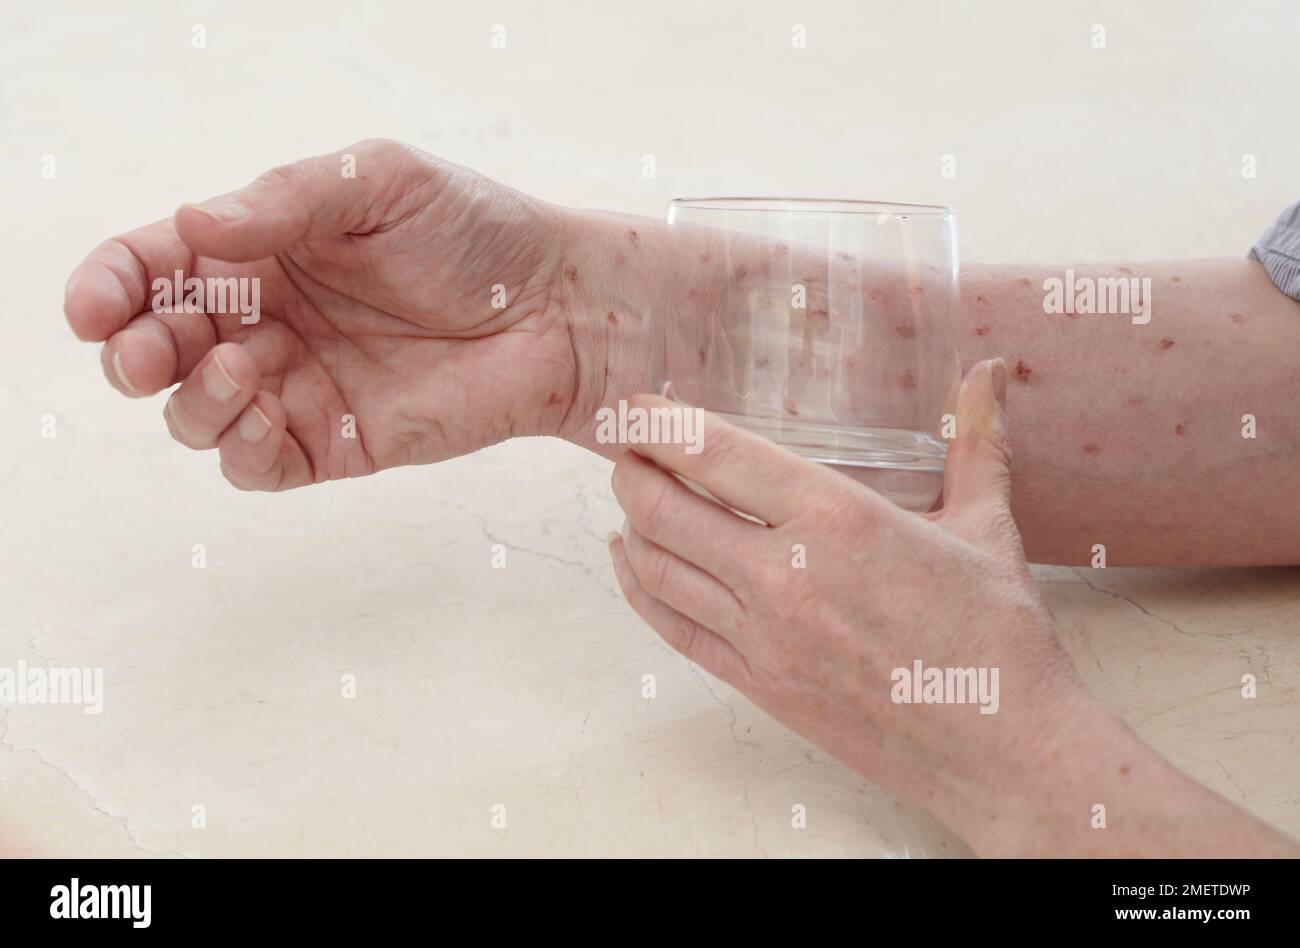 Meningitis rash and glass test -Fotos und -Bildmaterial in hoher Auflösung  – Alamy